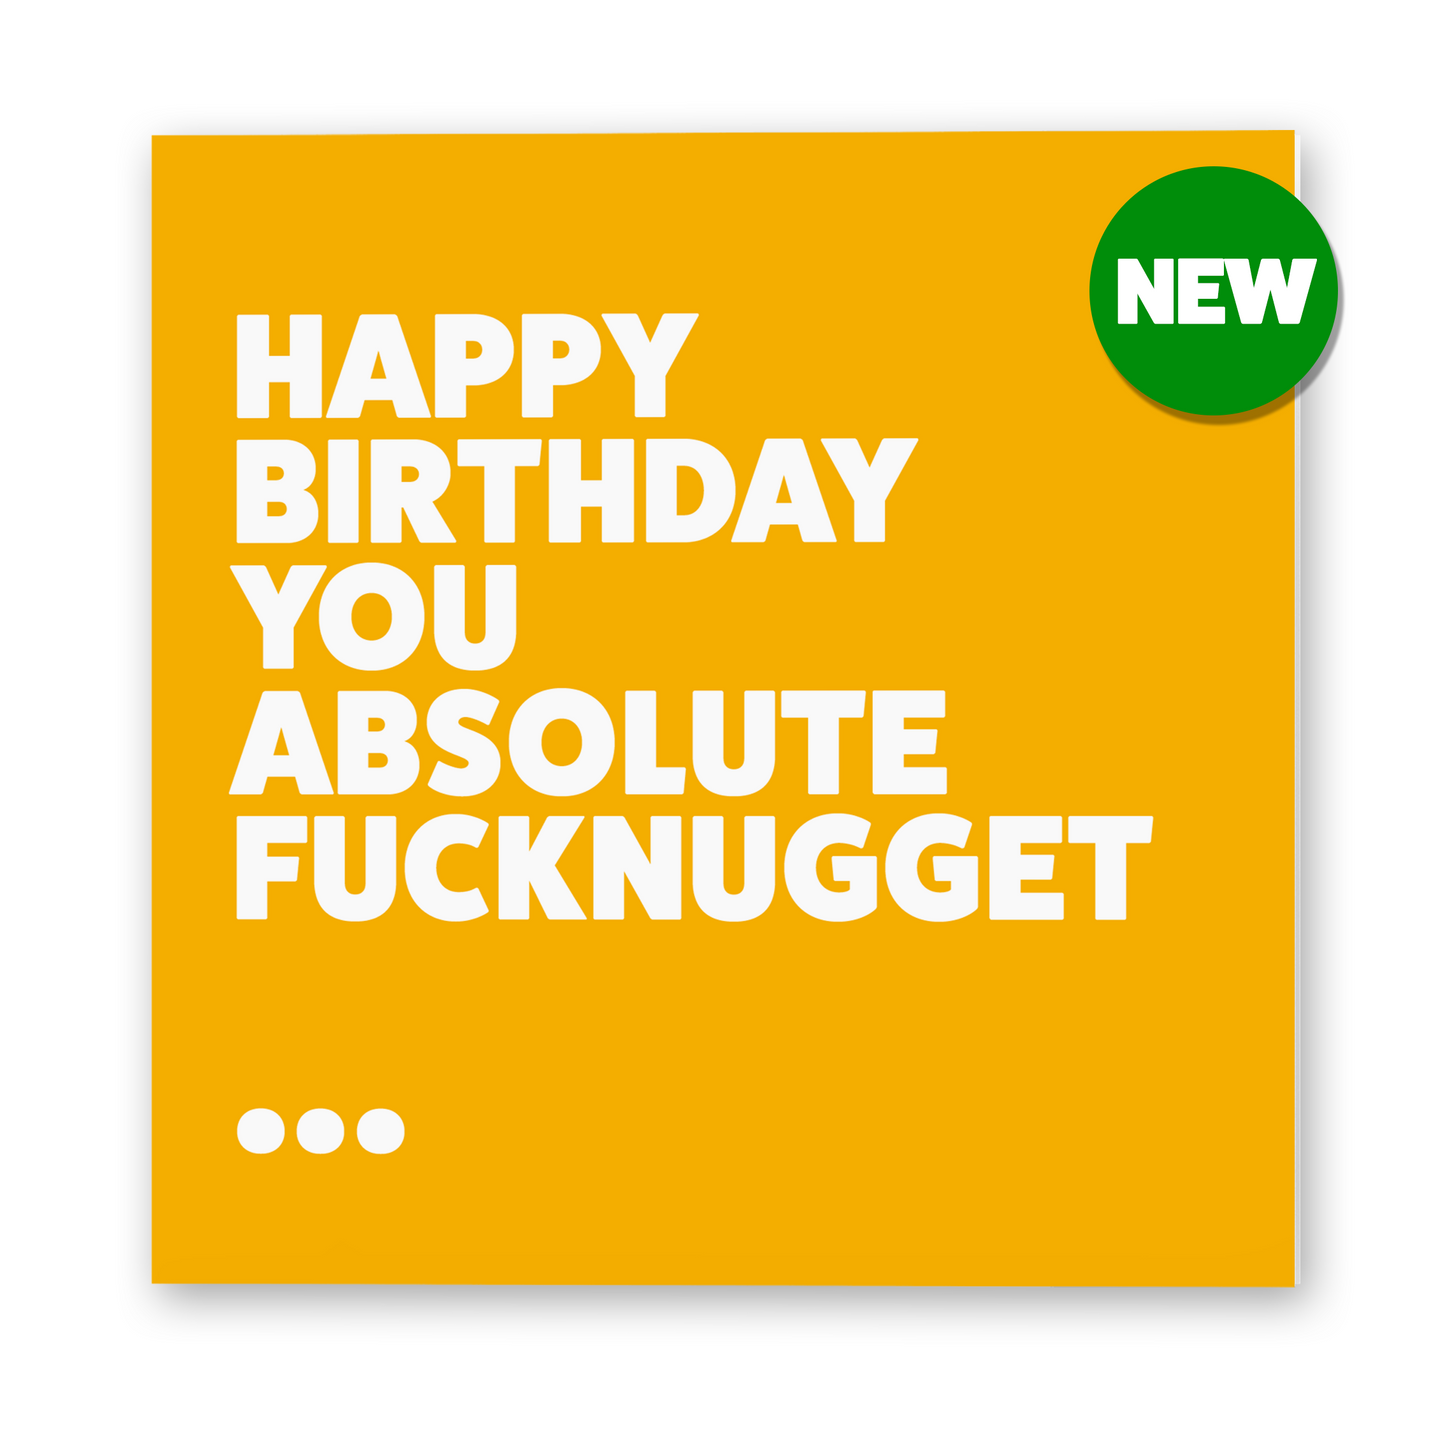 SALE - Fucknugget Birthday Card